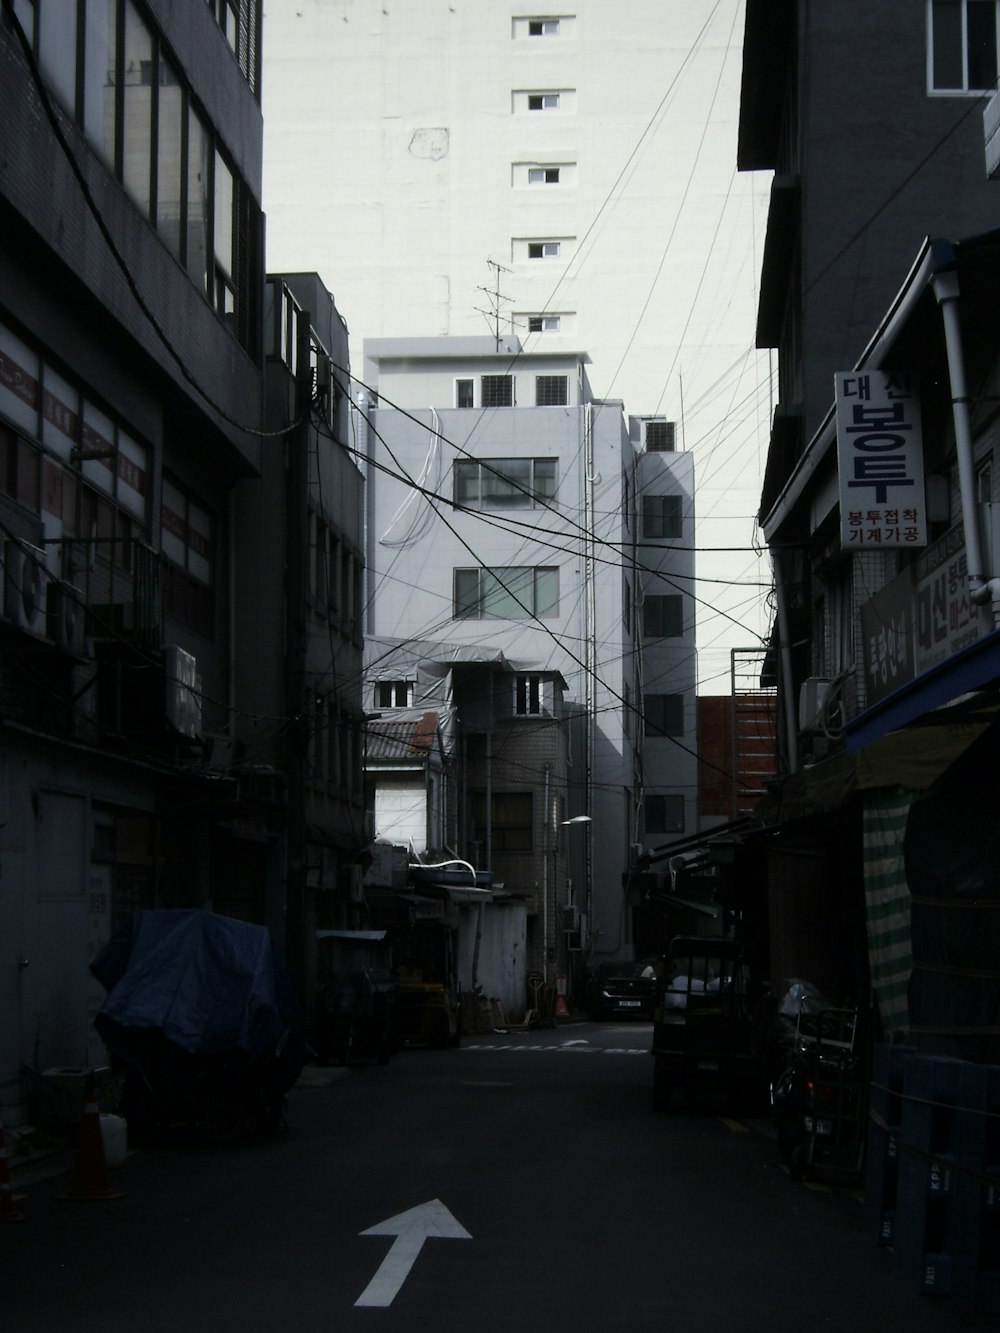 Un callejón estrecho con un edificio al fondo